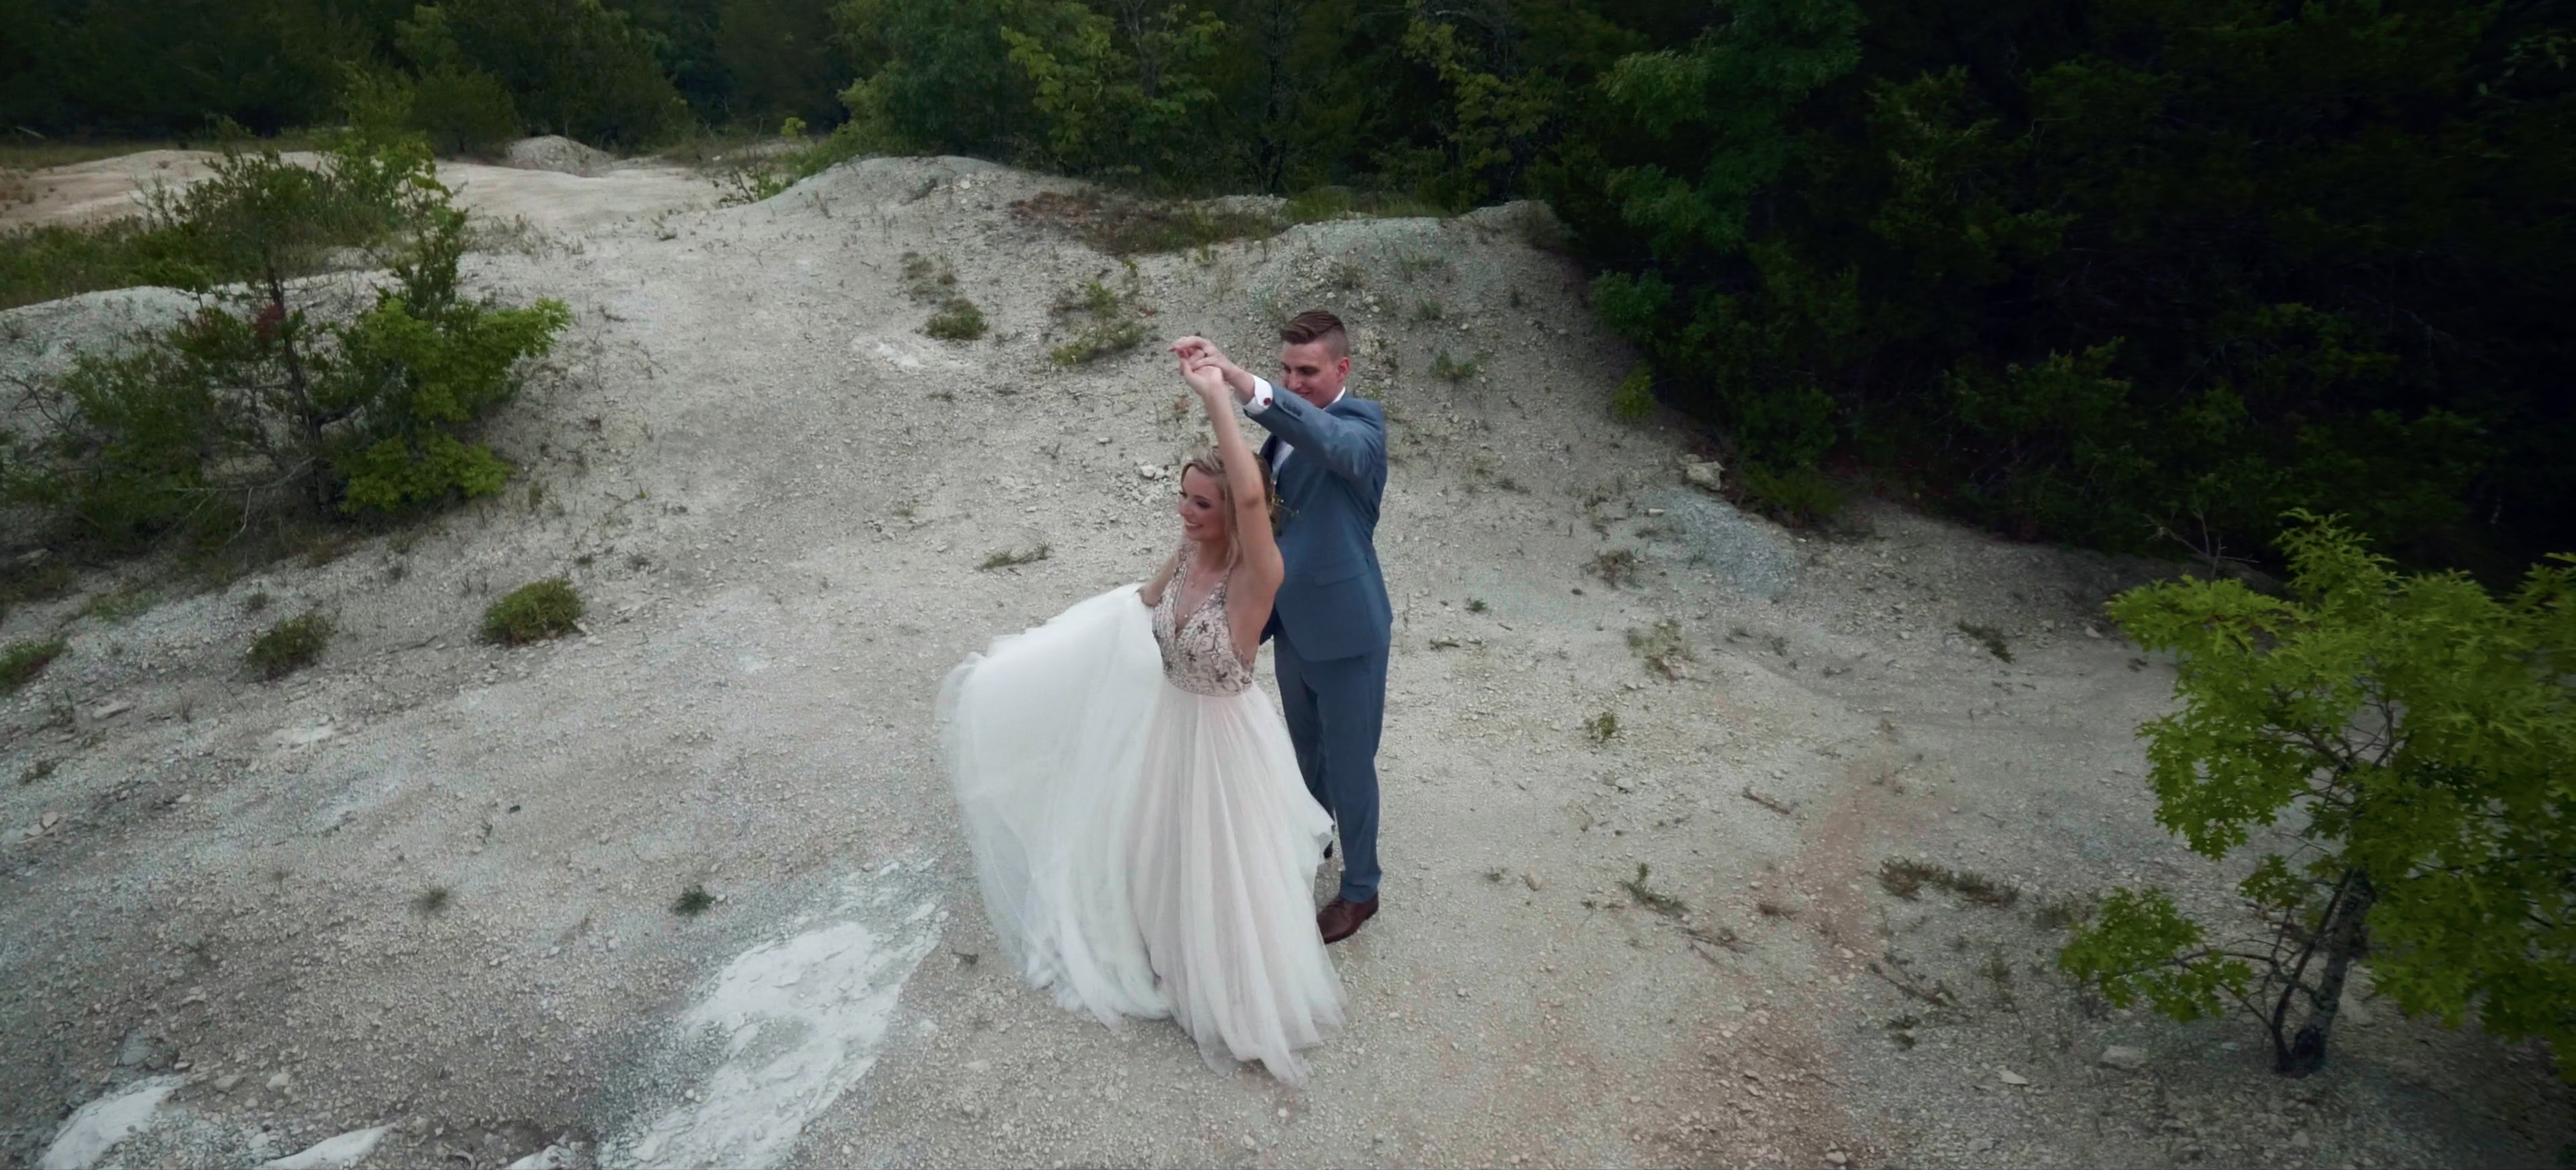 Dallas wedding videographers Reel Simple Wedding Films